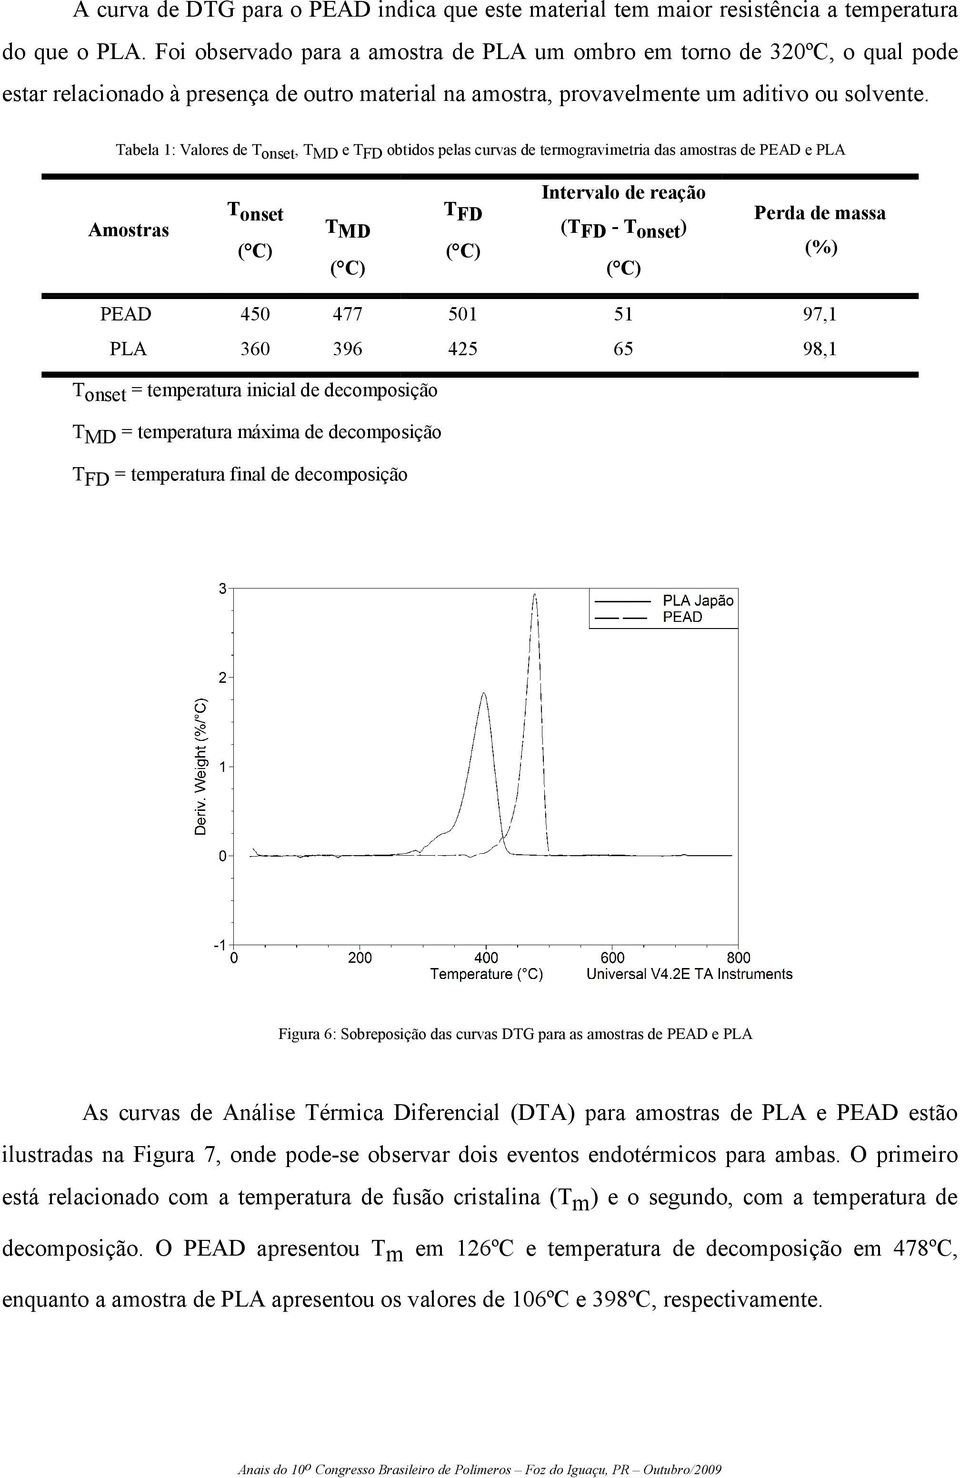 Tabela 1: Valores de Tonset, TMD e TFD obtidos pelas curvas de termogravimetria das amostras de PEAD e PLA Amostras T onset ( C) T MD ( C) T FD ( C) Intervalo de reação (T FD - T onset ) ( C) Perda